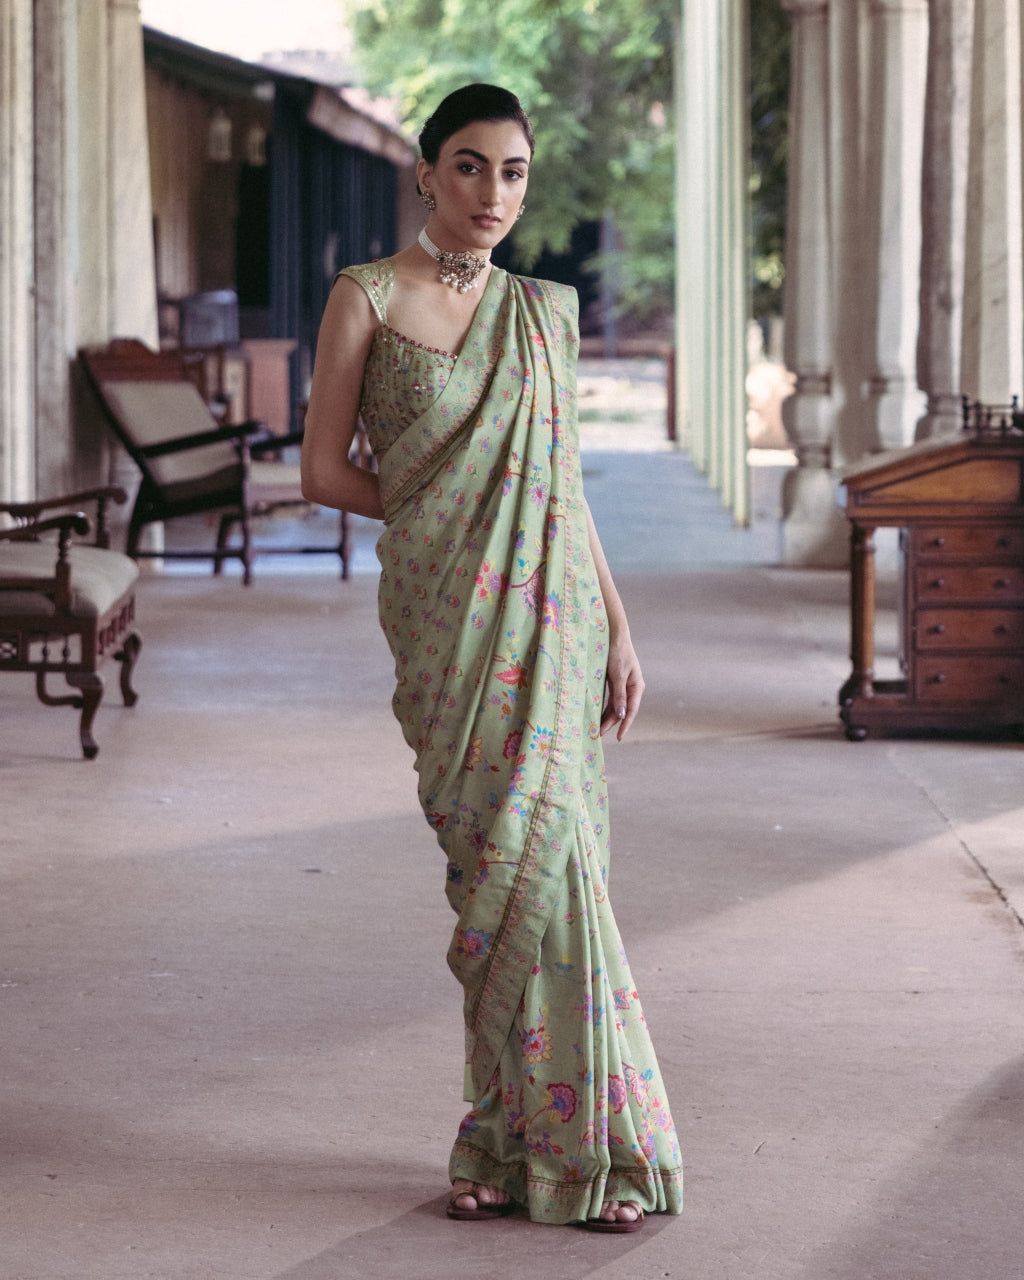 Royal Blue Mirror Scallop Sari Set